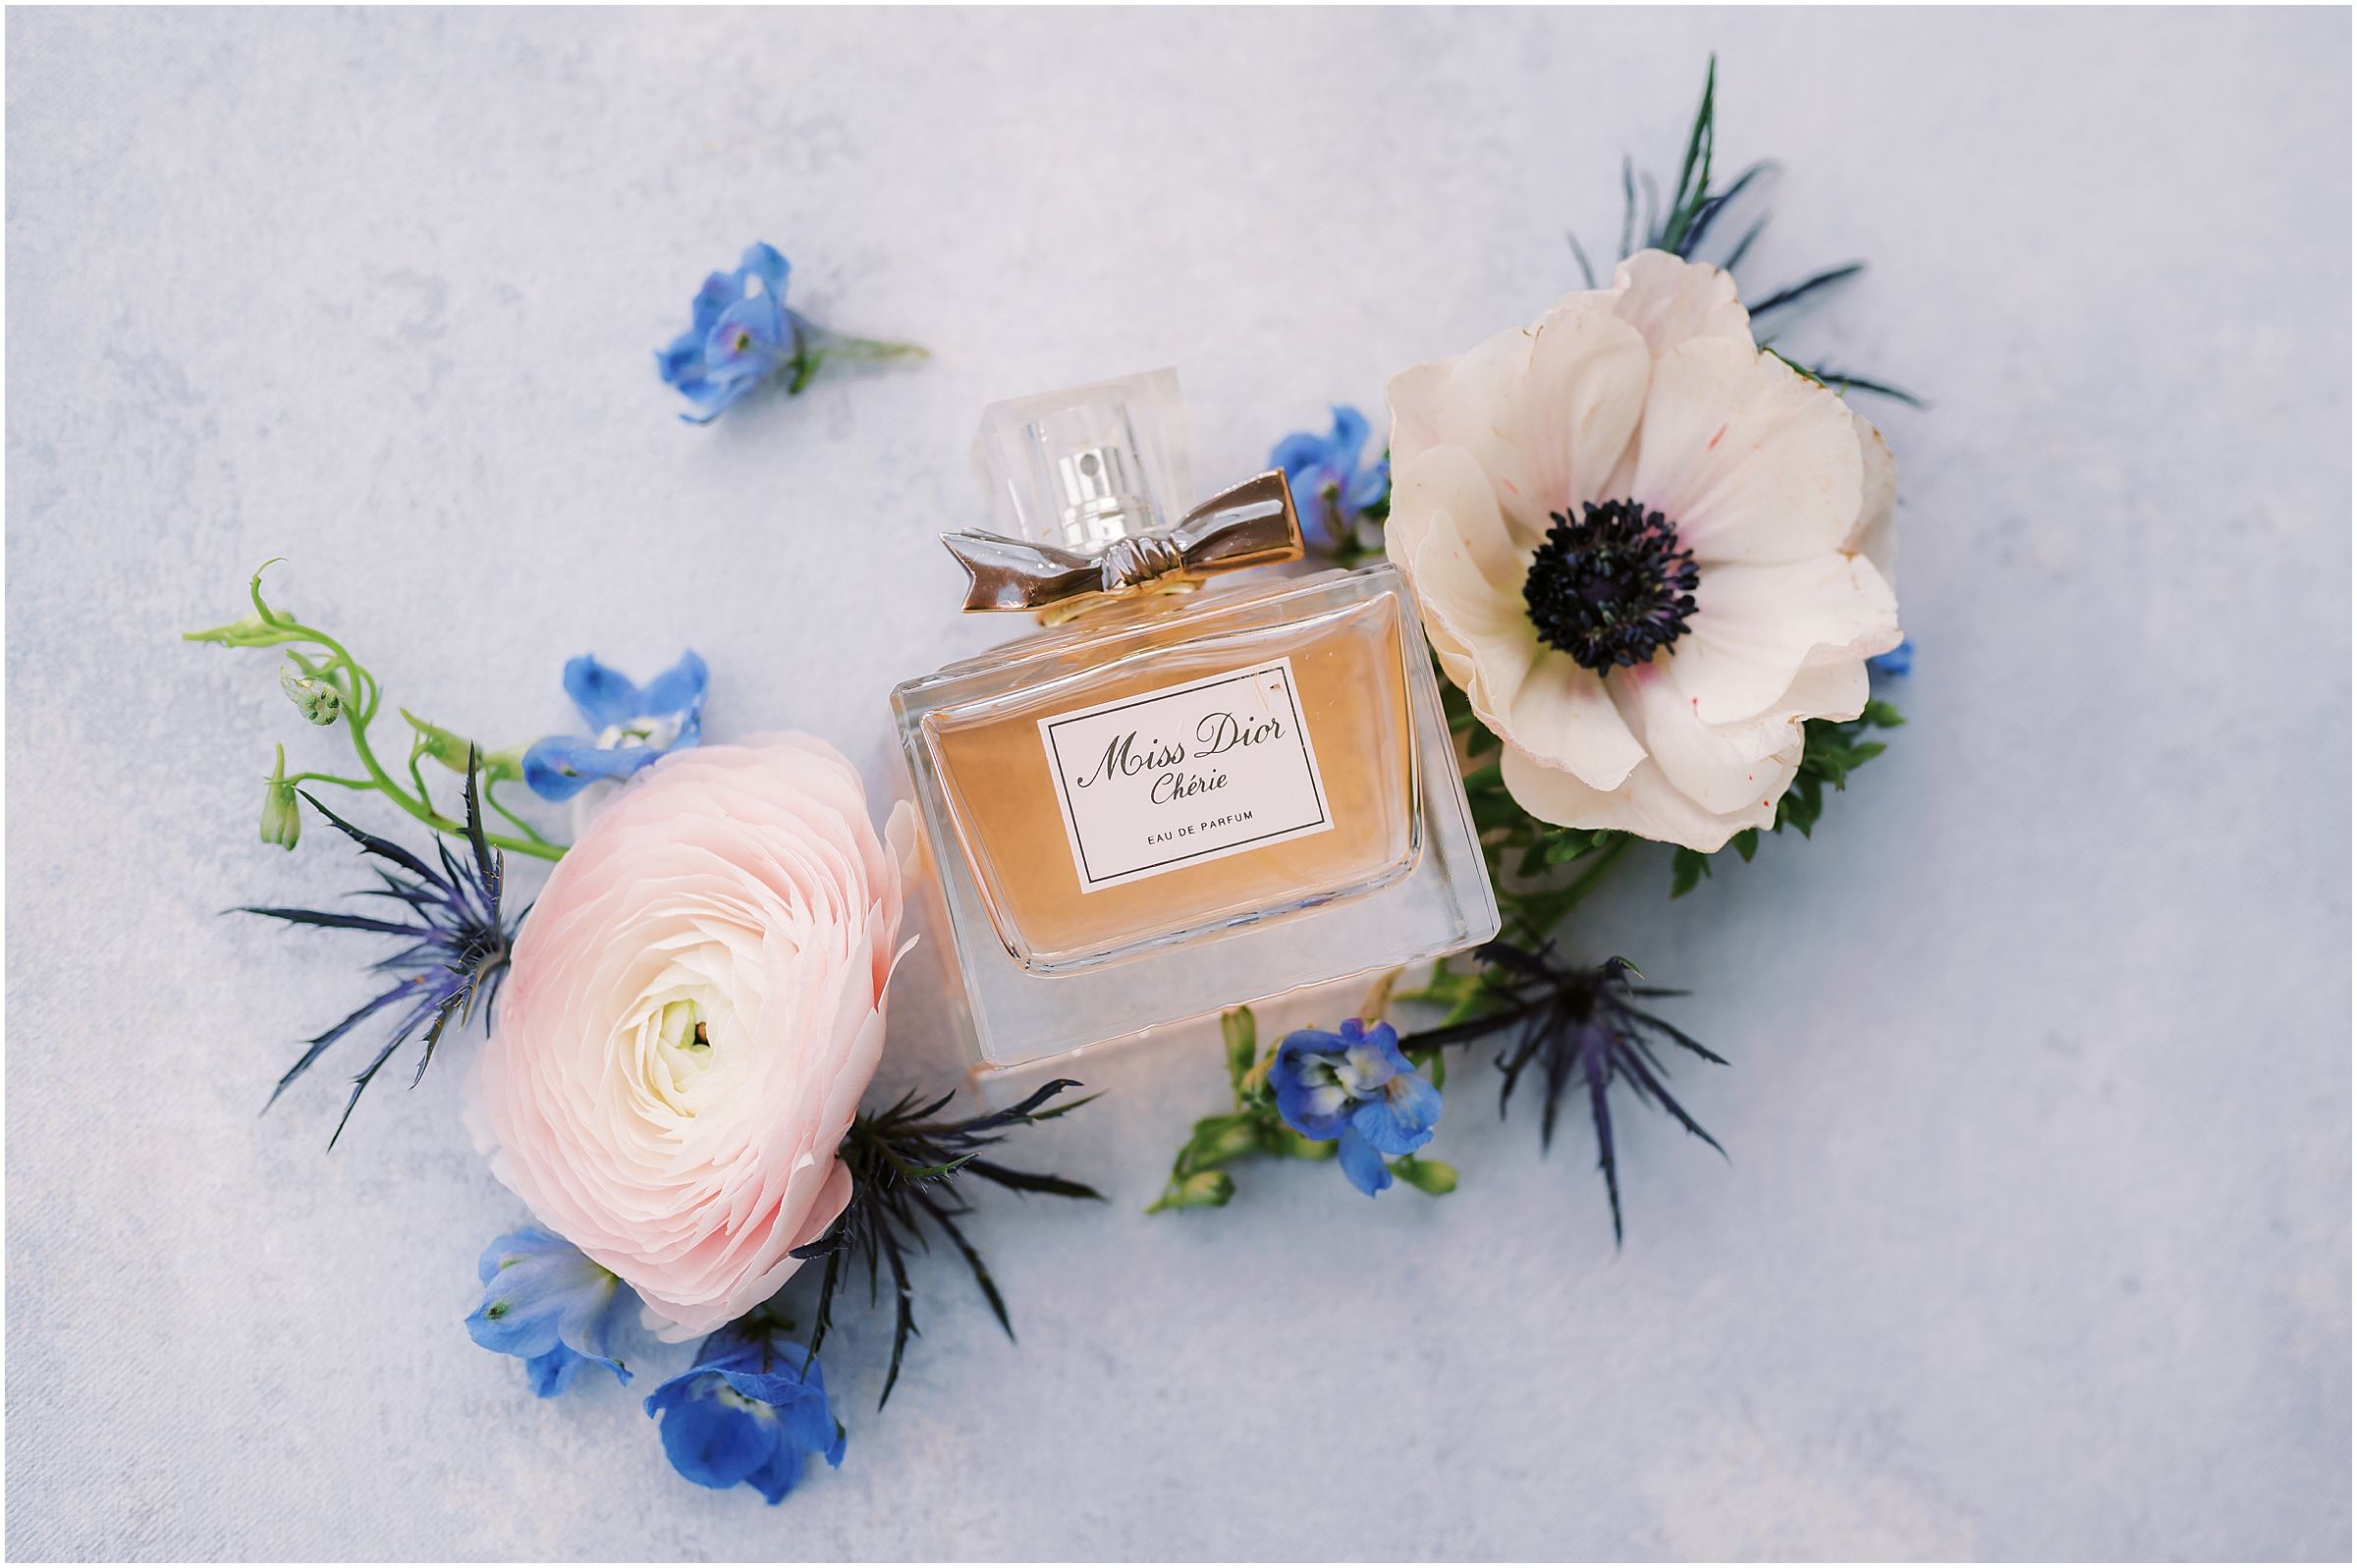 Miss Dior Cherie wedding perfume